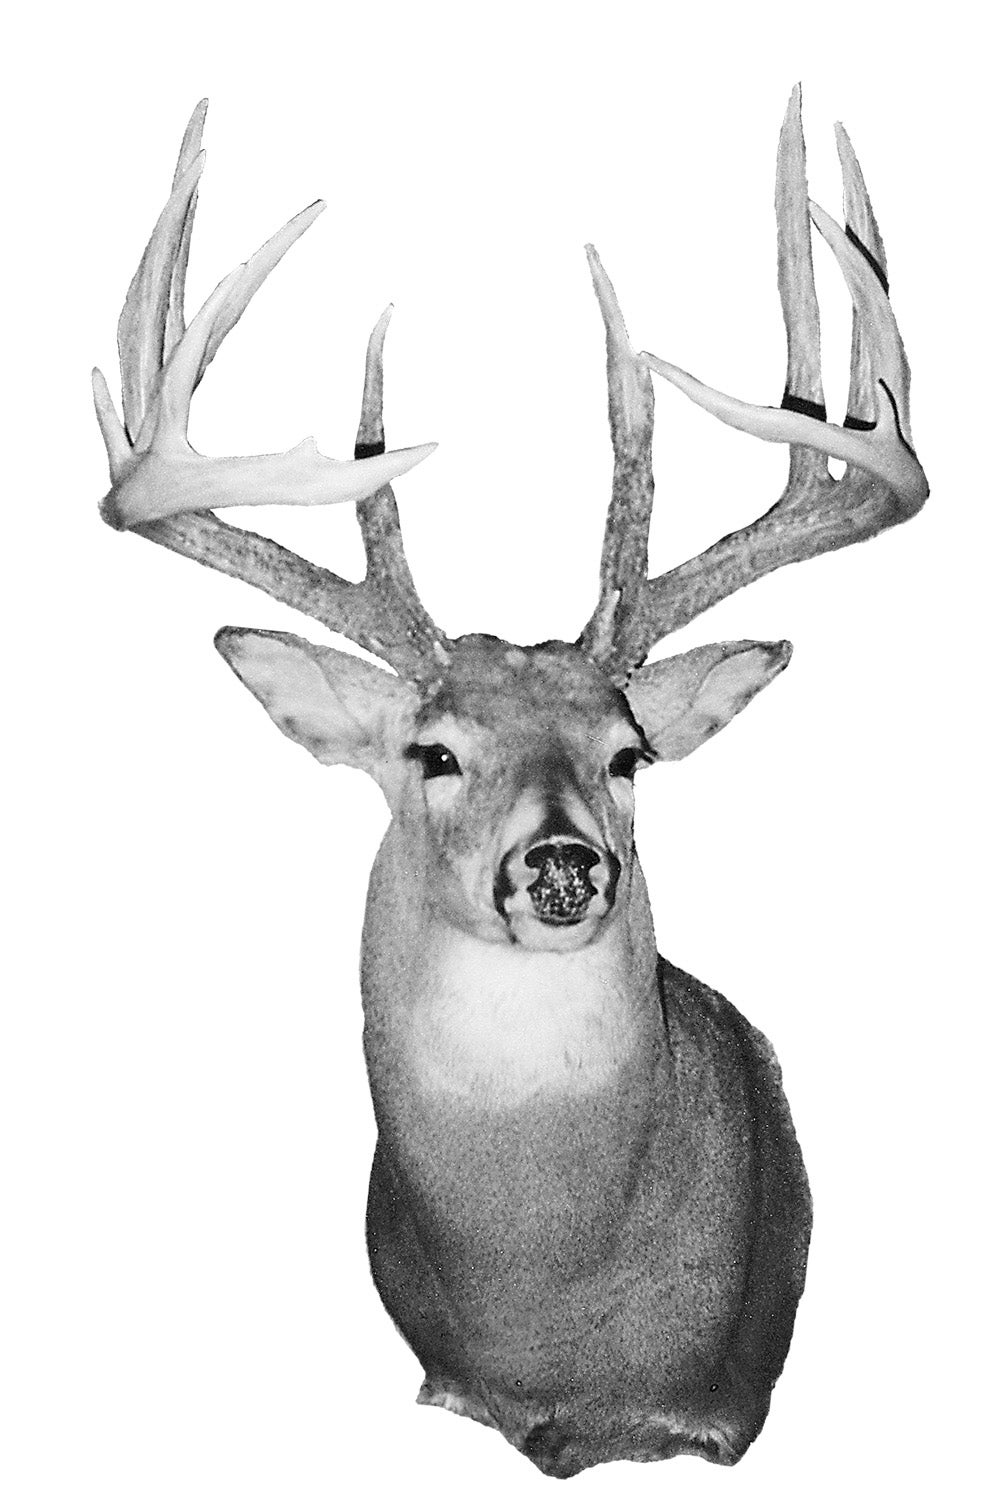 B&C record whitetail deer from Michigan